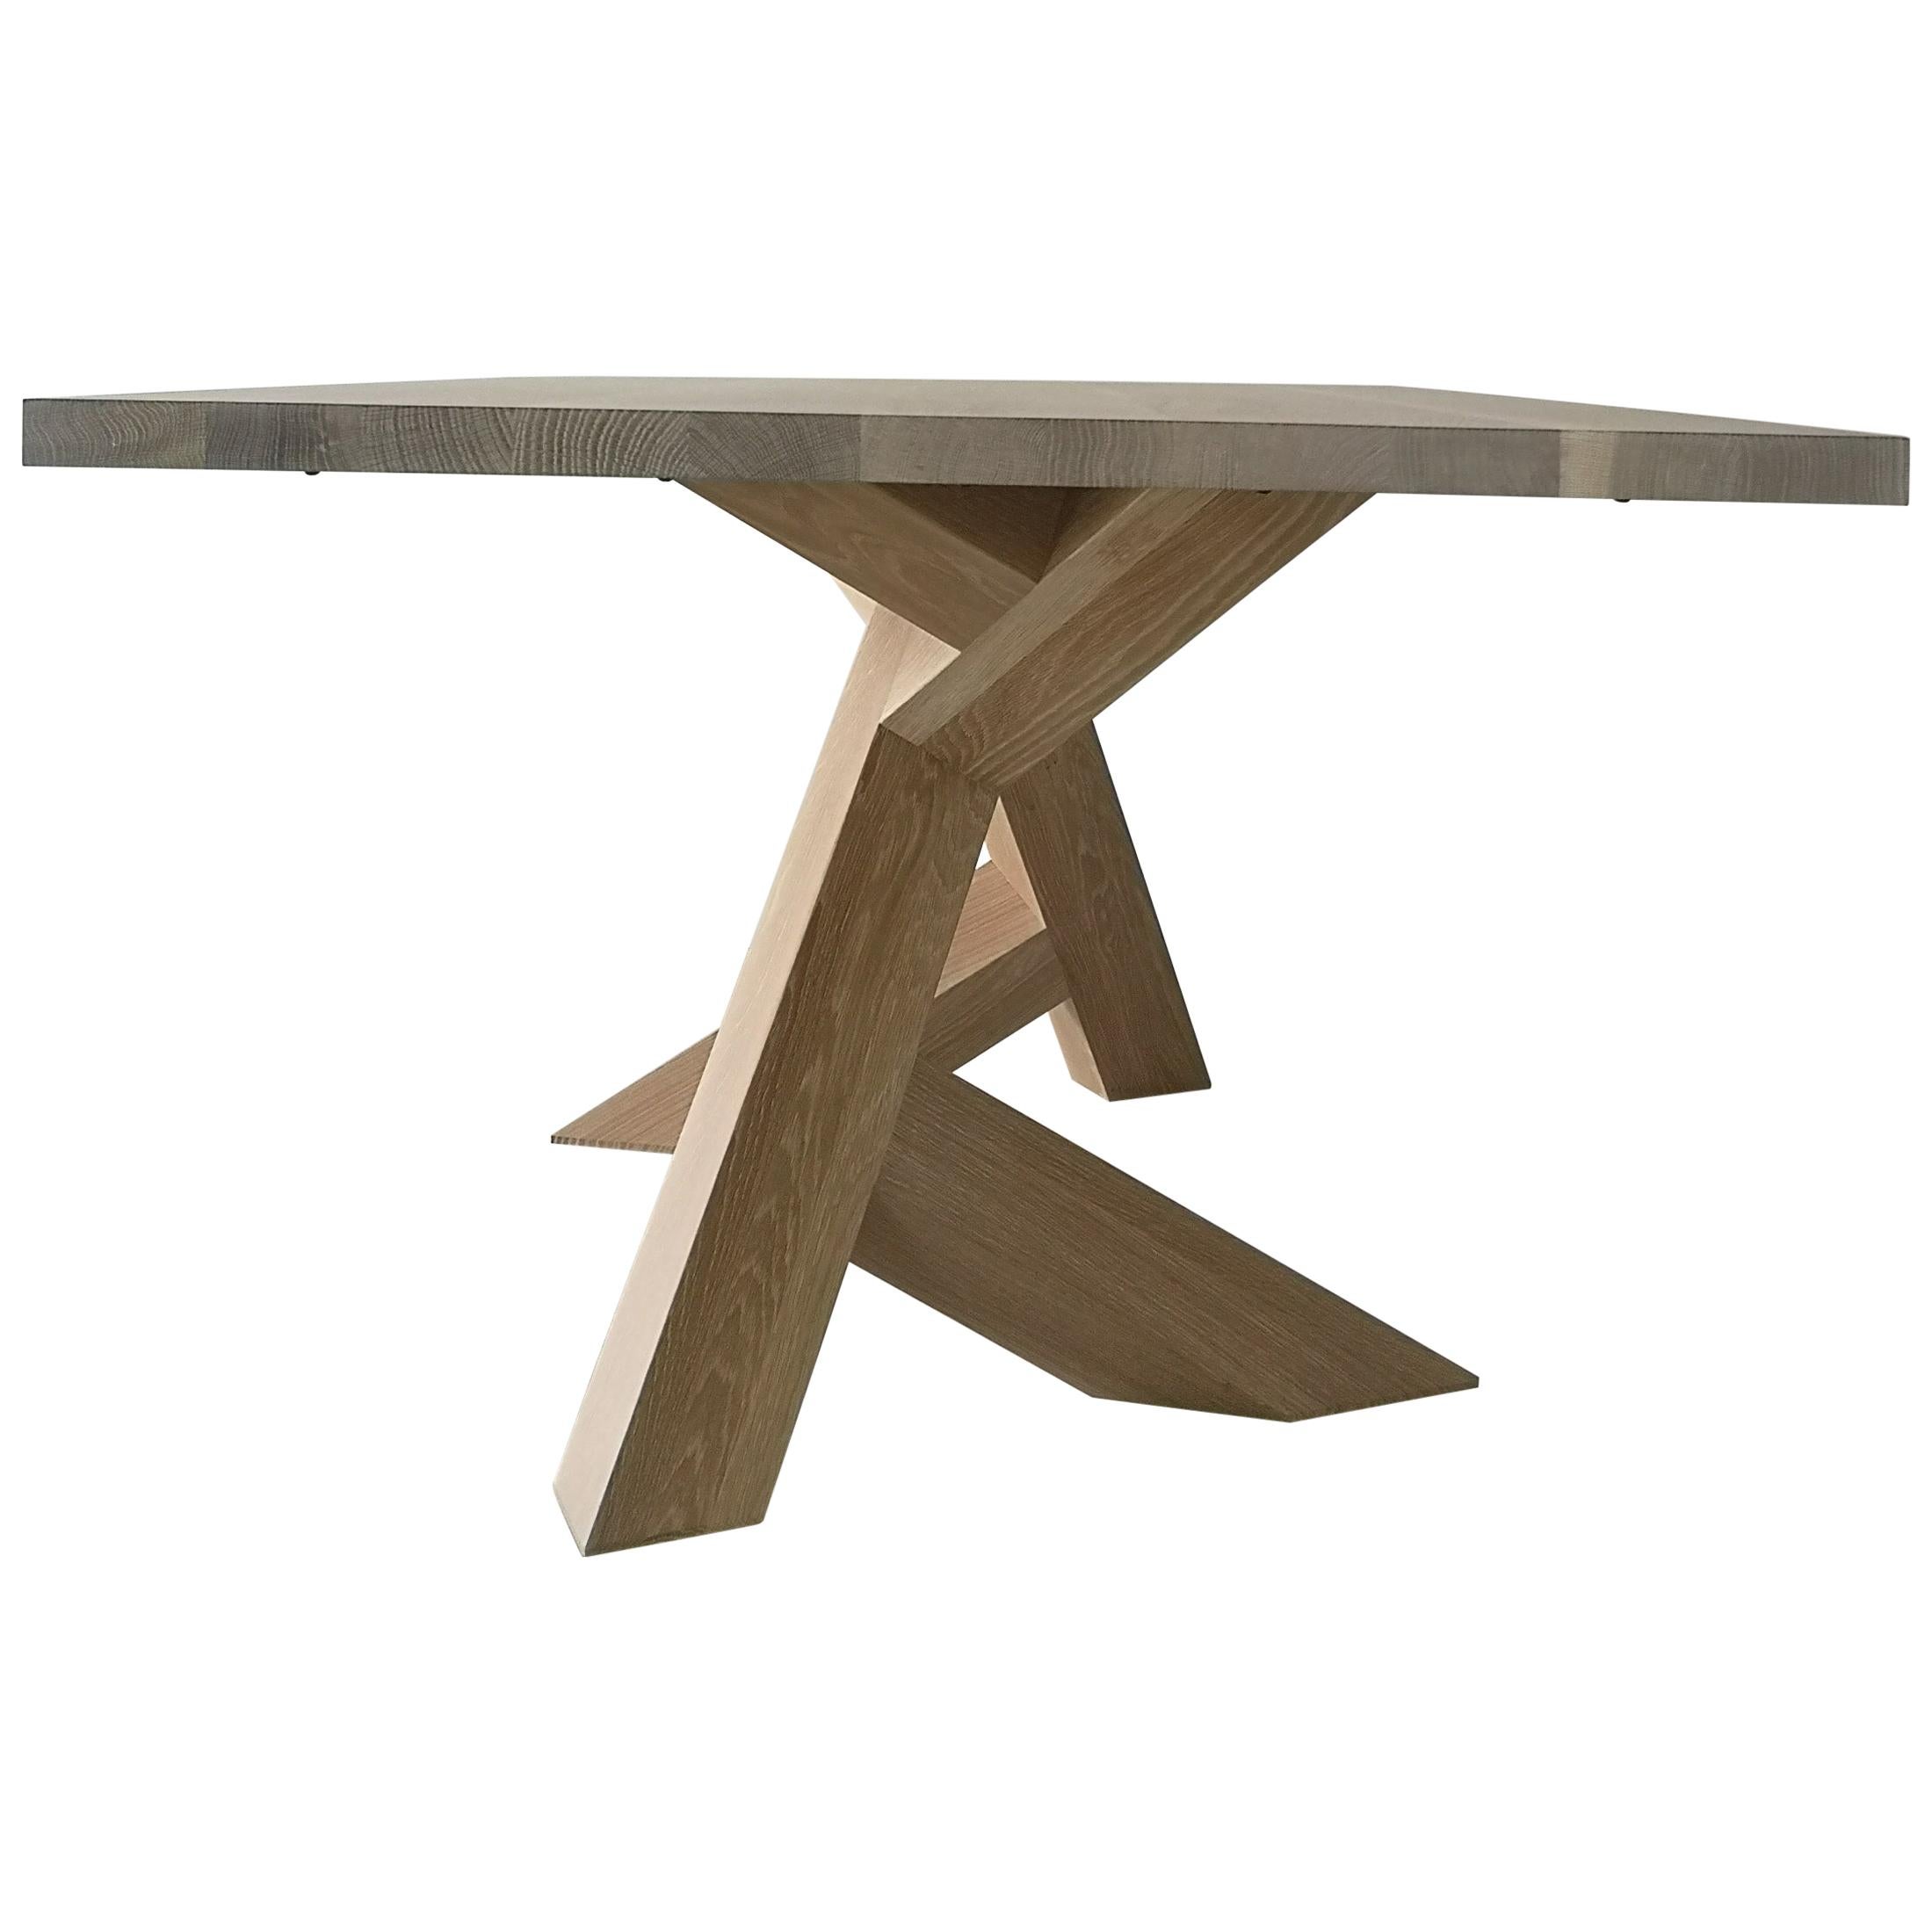 Iconoclast Modern Hardwood Dining Table by Izm Design